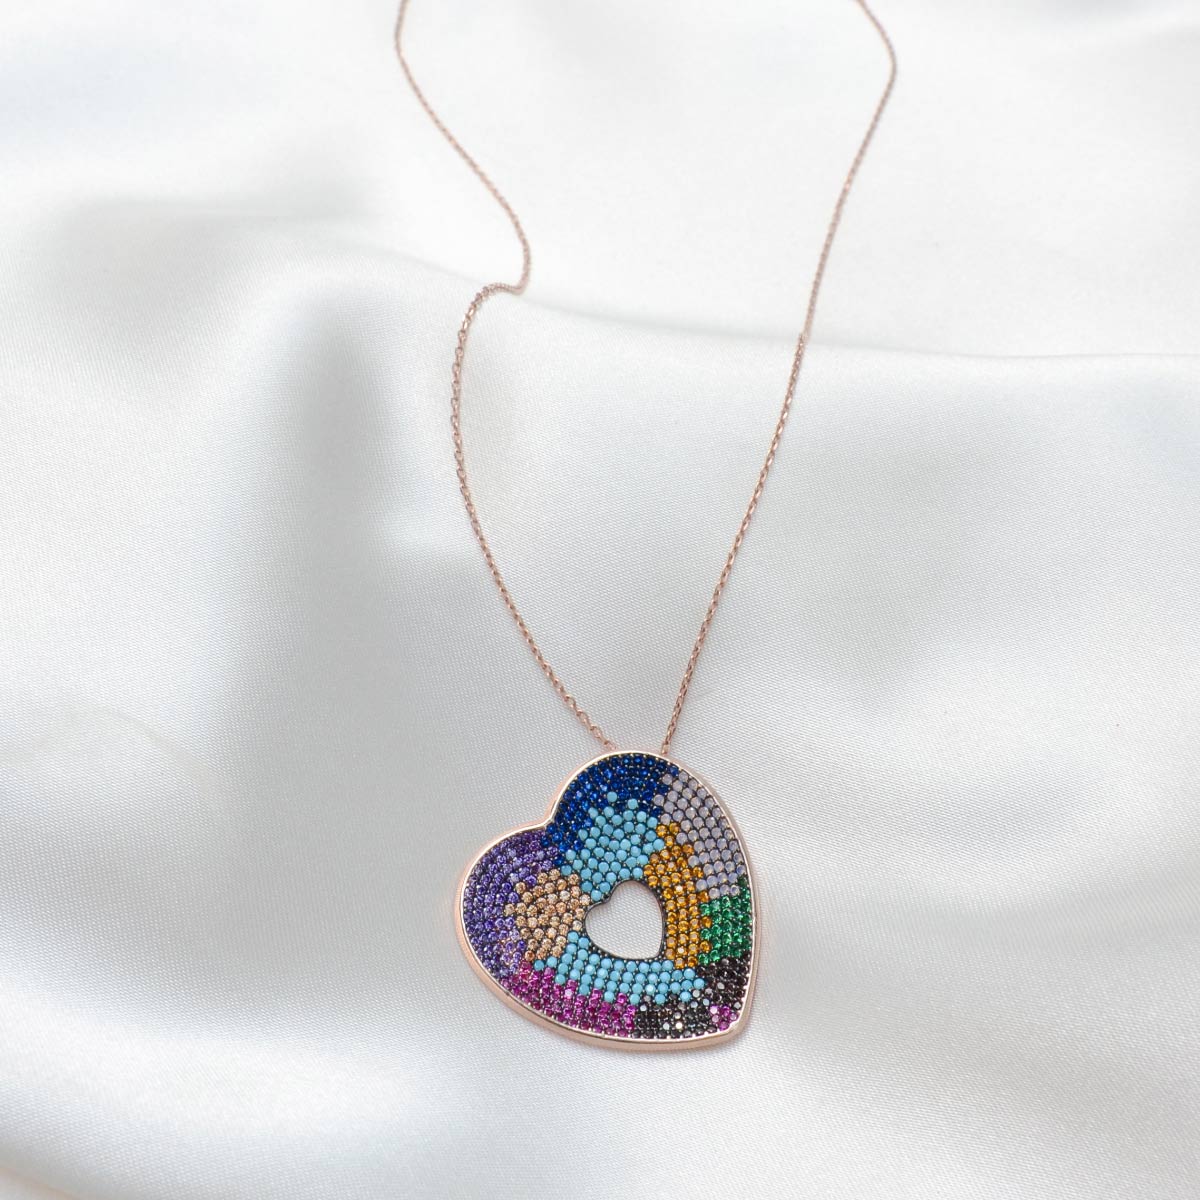 Dear Mom (Puzzle Piece Card) - Multicolor Crystal Heart Necklace Gift Set